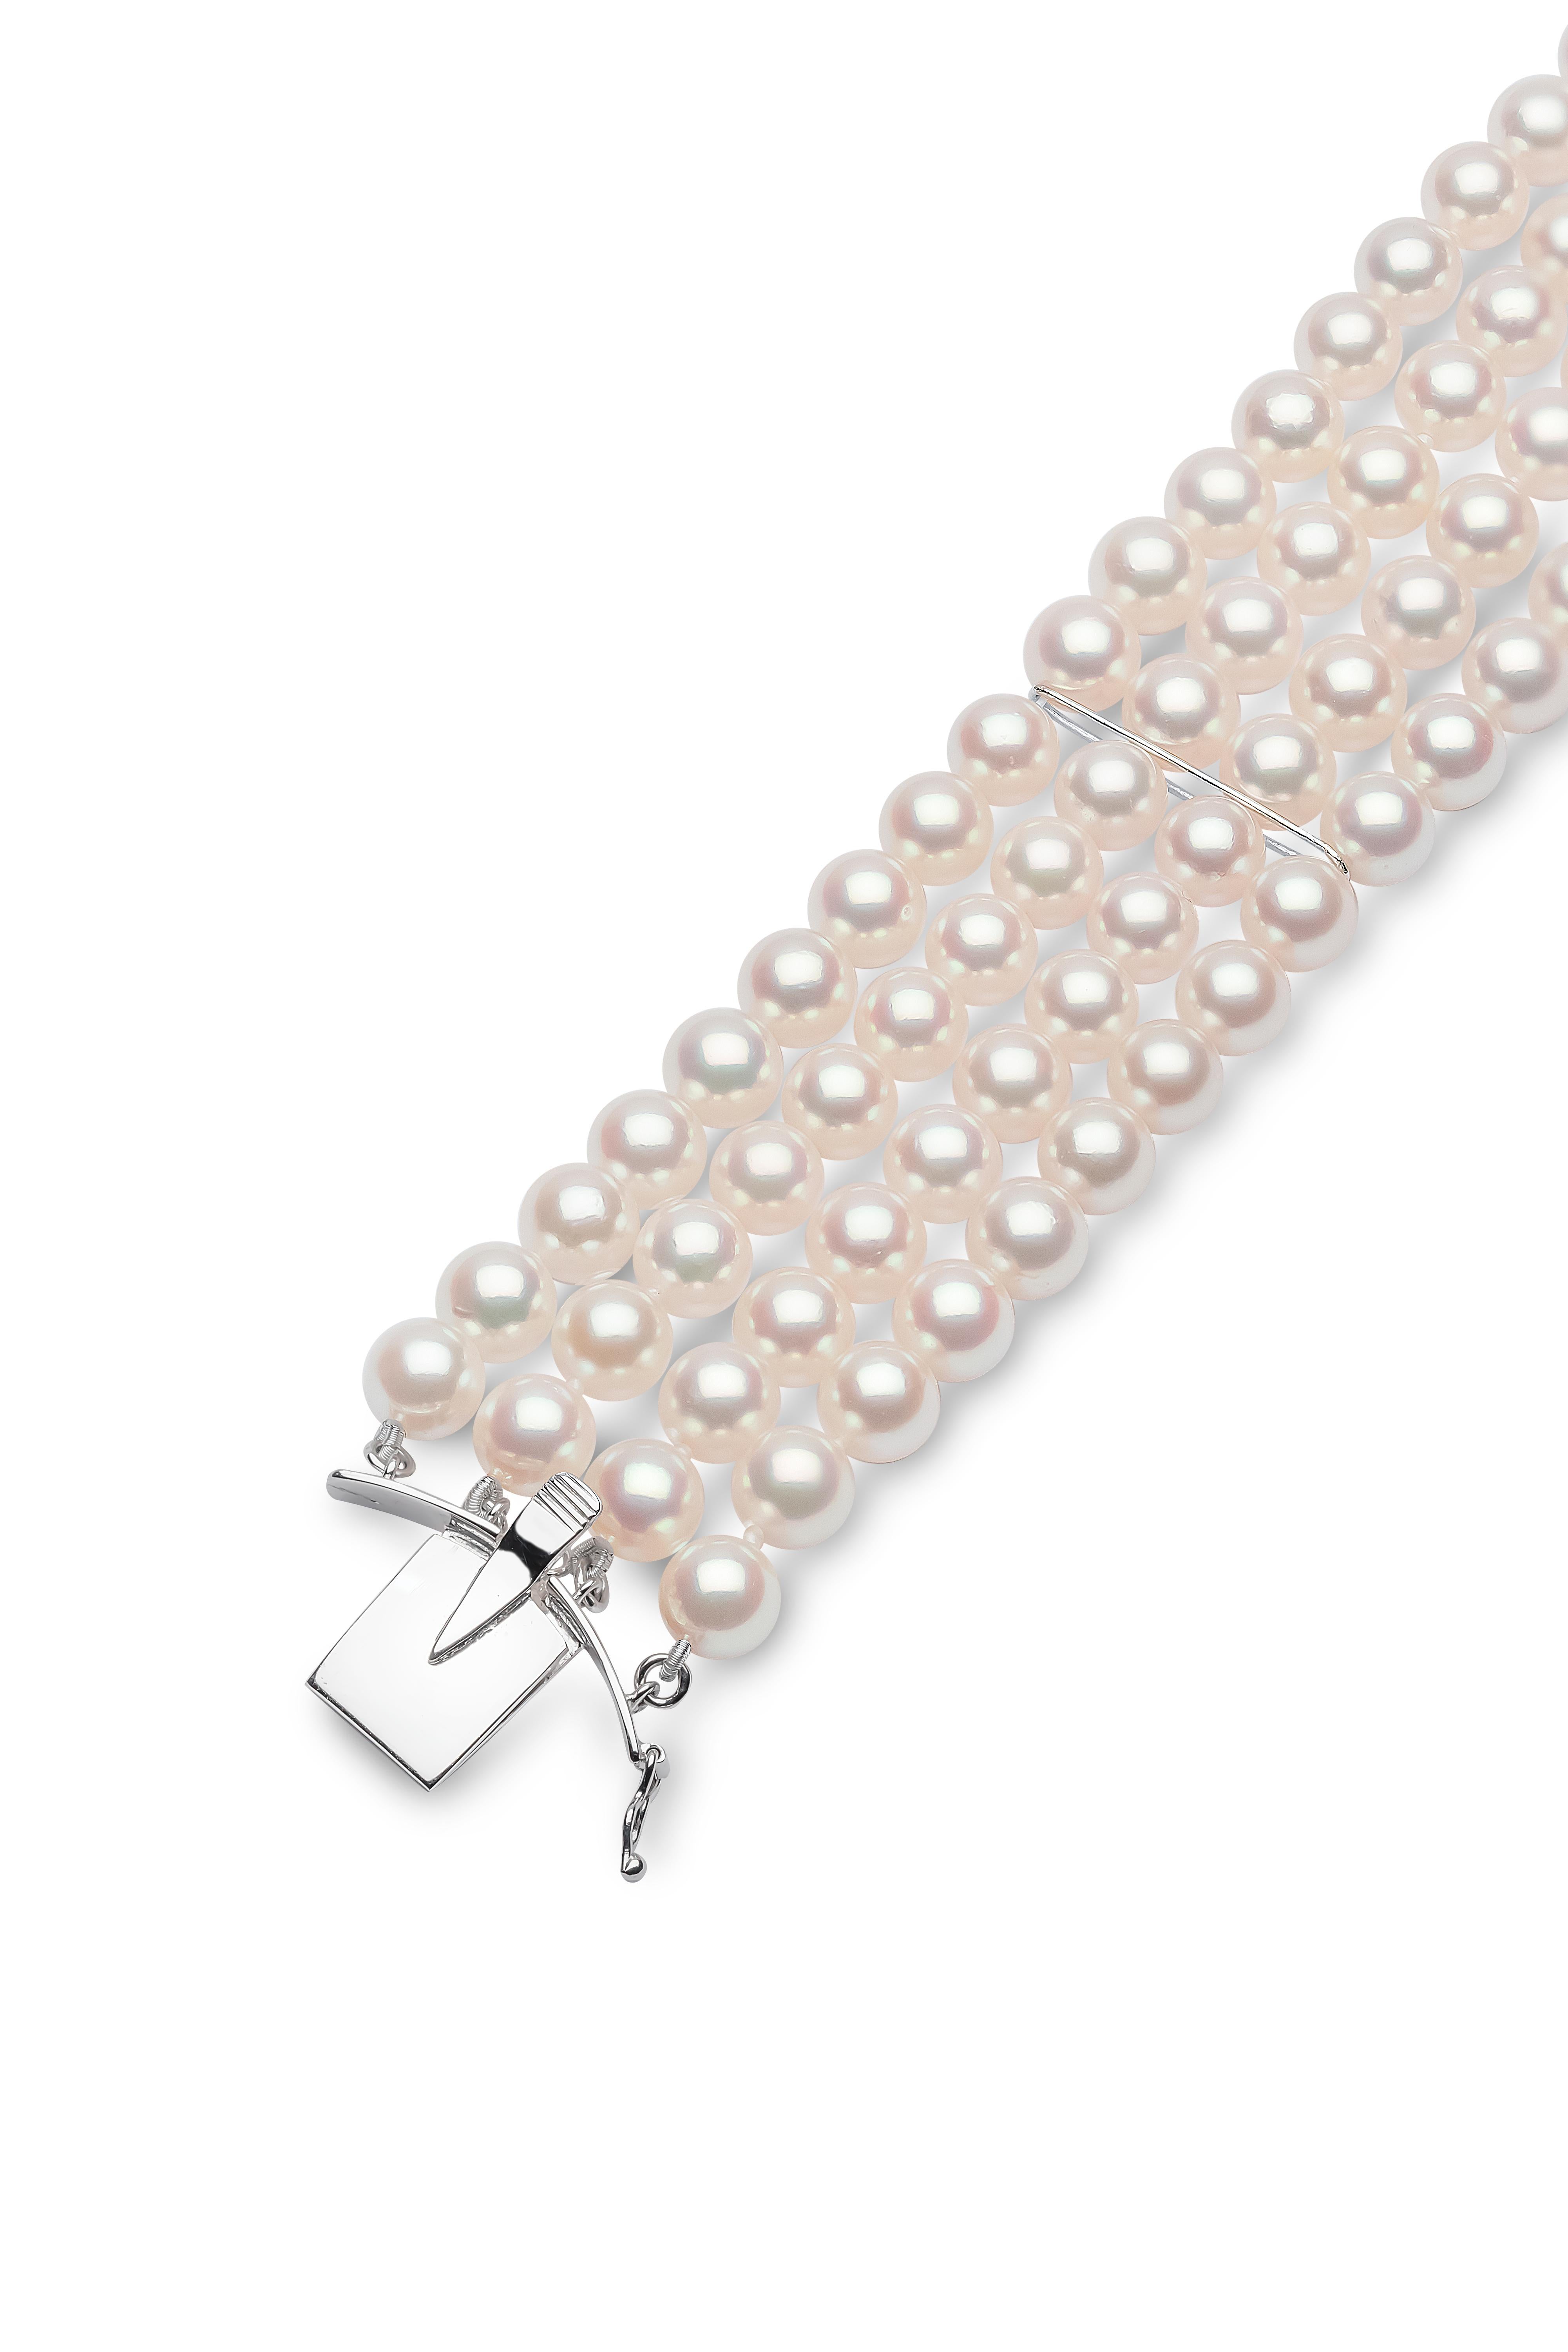 Contemporary Yoko London Akoya Pearl and Diamond Choker Necklace in 18K White Gold